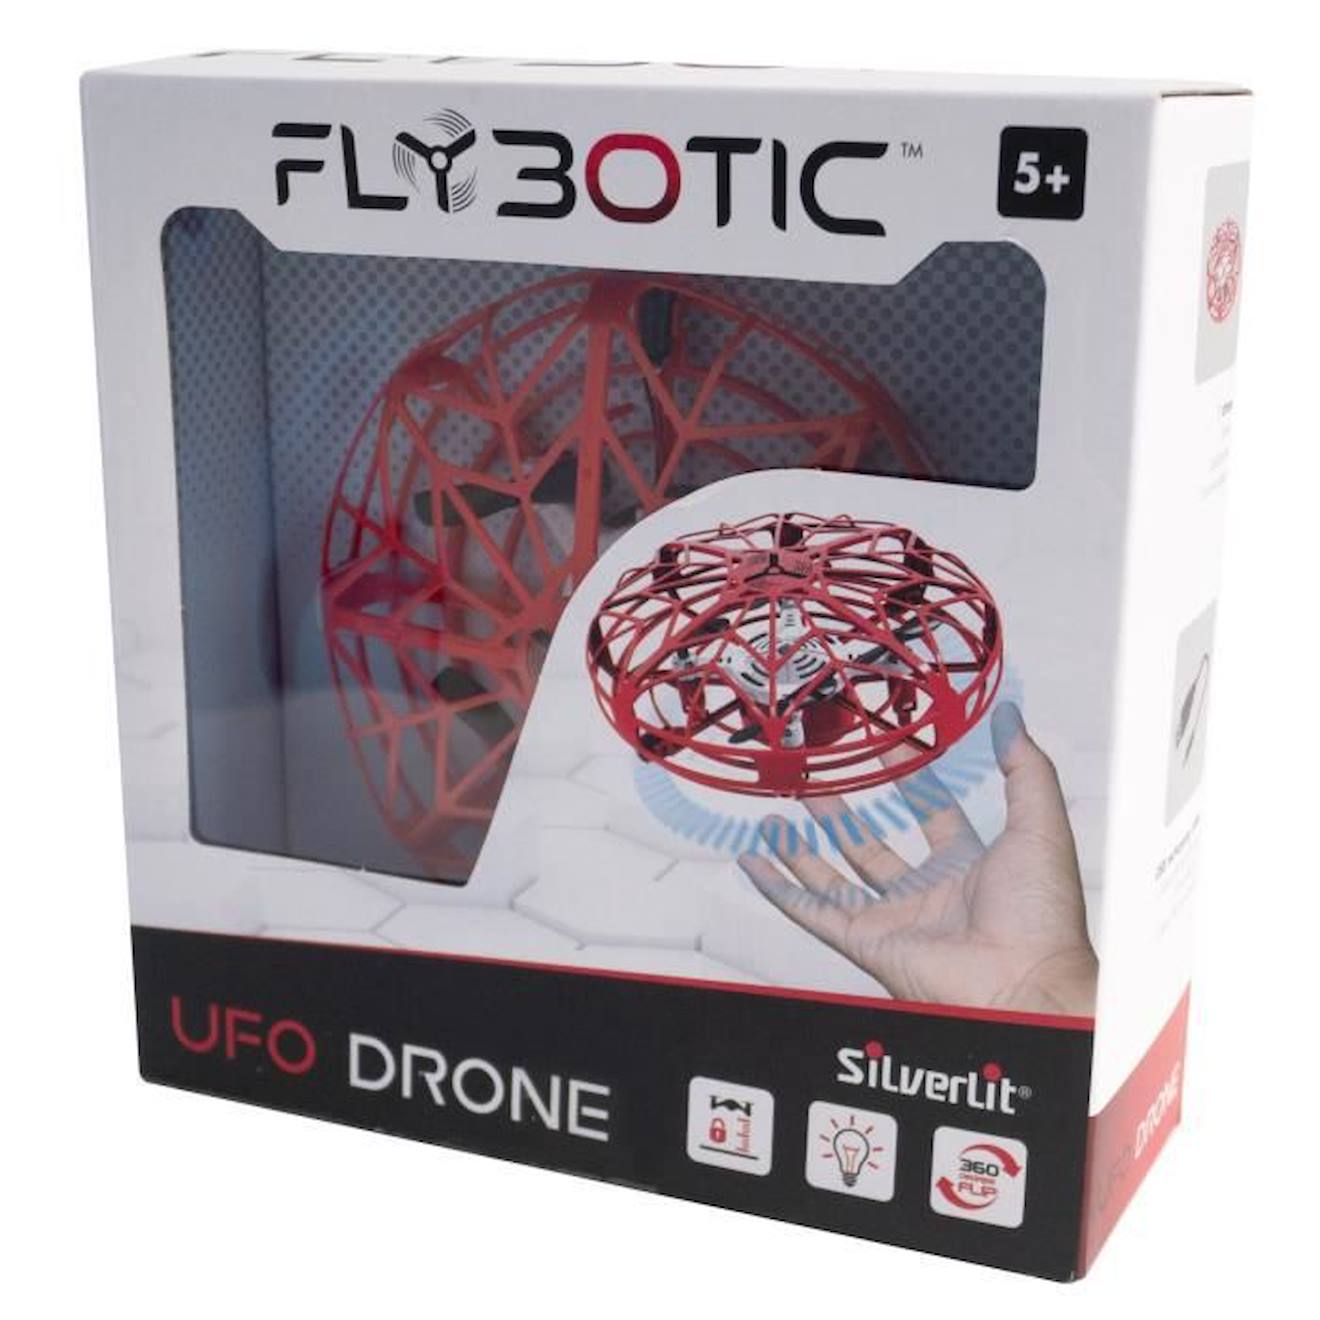 https://media.vertbaudet.fr/Pictures/vertbaudet/293923/drone-enfant-flybotic-ufo-capteur-de-mouvement-looping-360-12-cm-des-5-ans.jpg